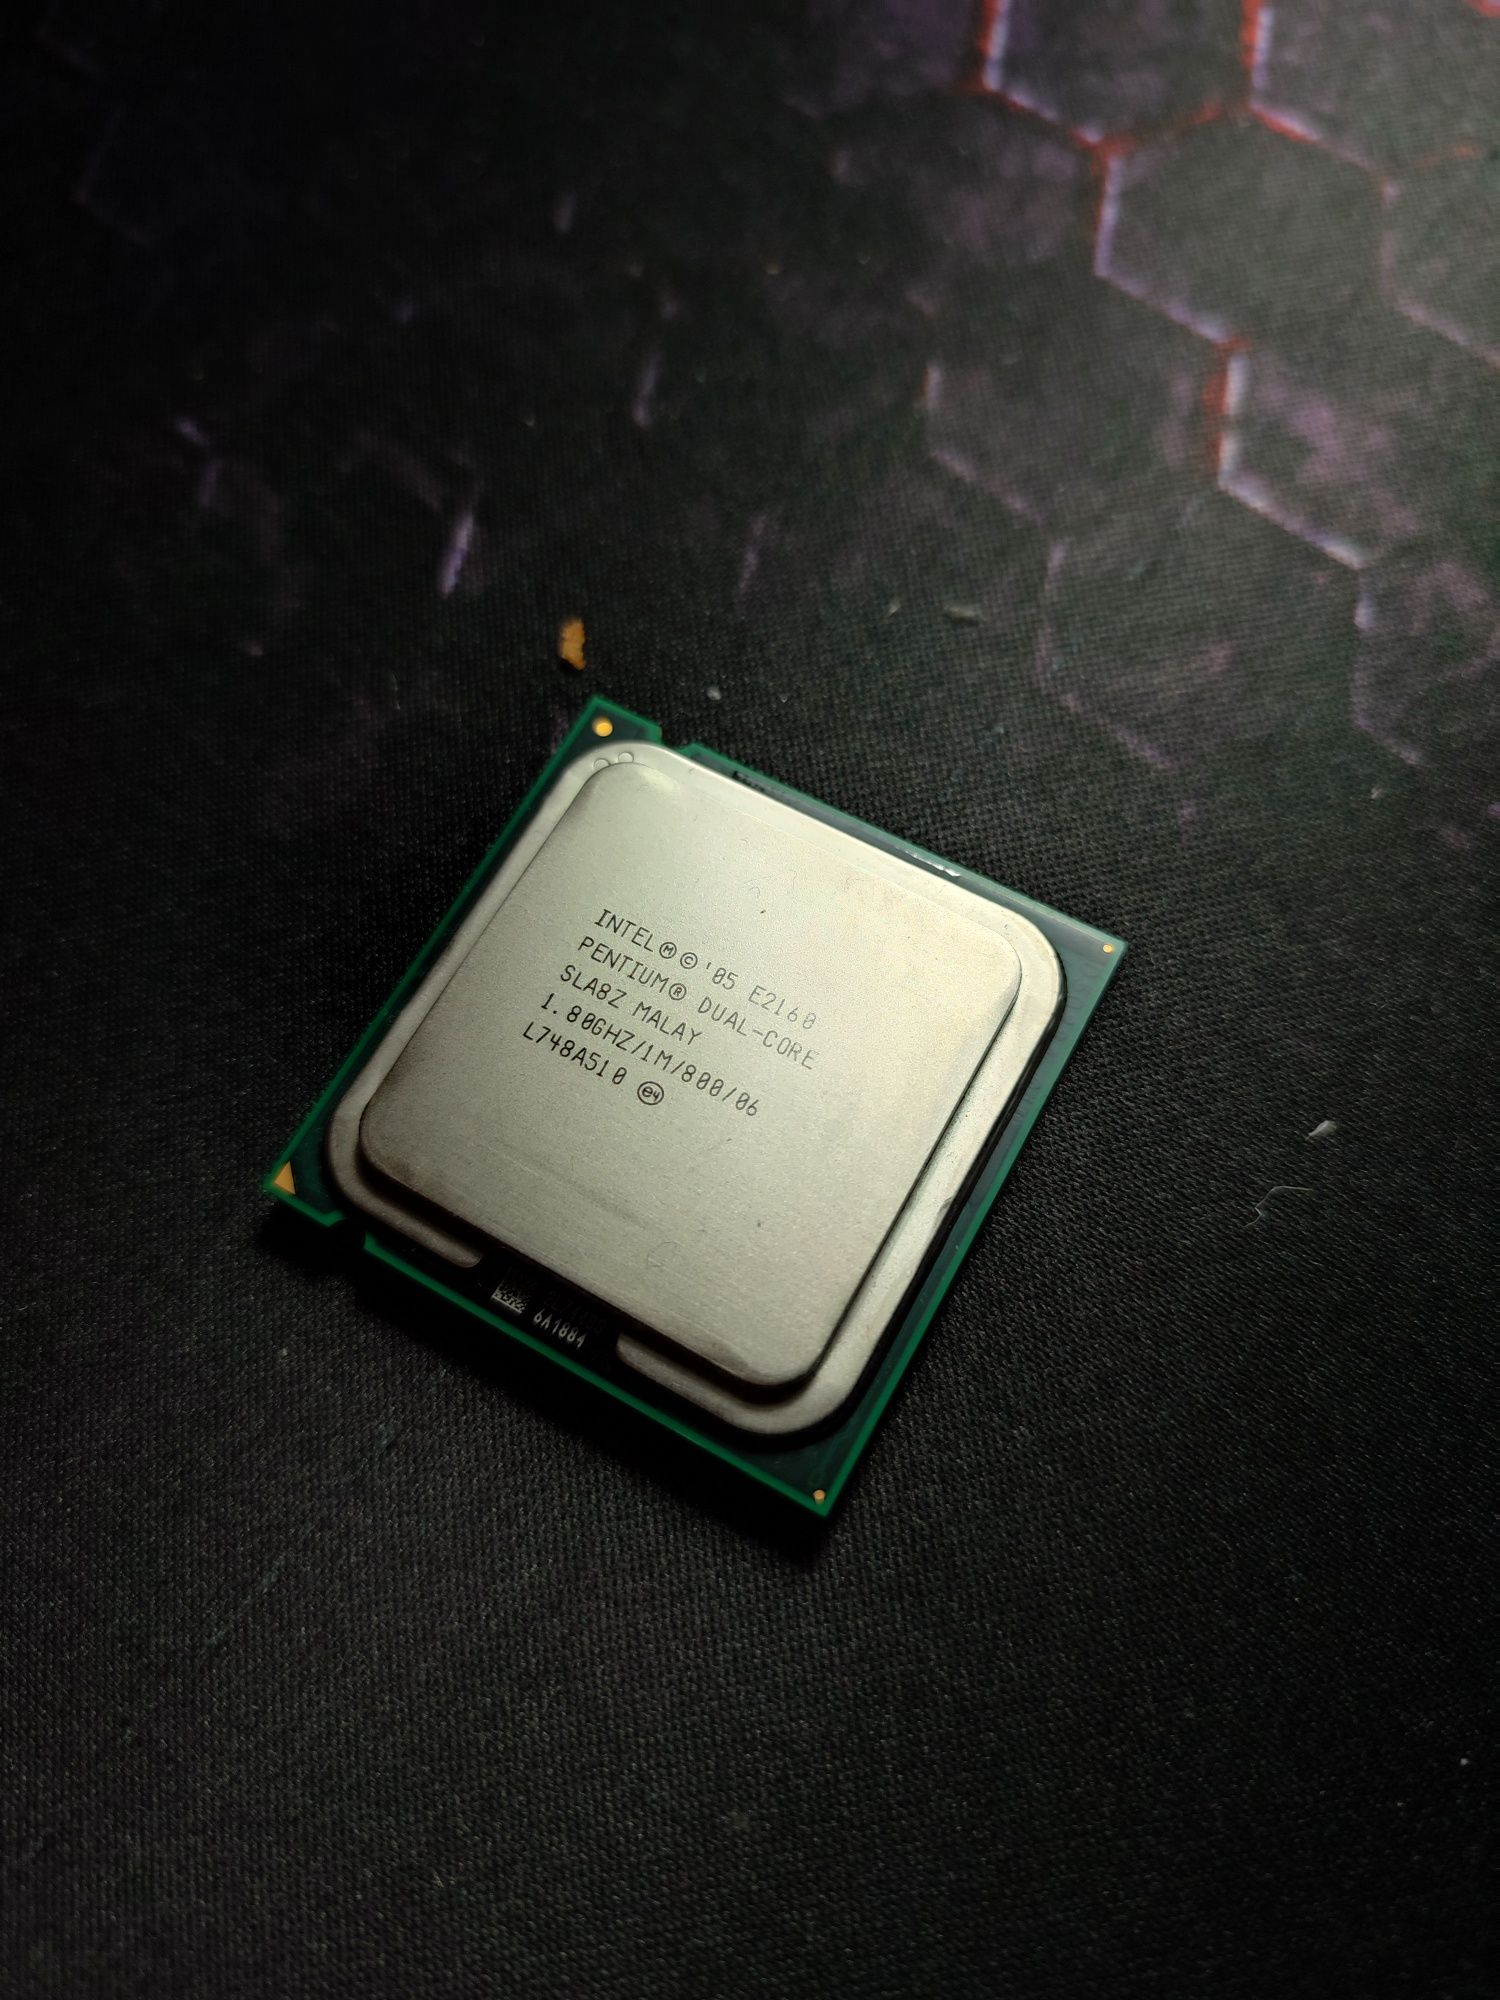 Procesor Pentium Dual-Core E2160 socket 775 + cooler stock